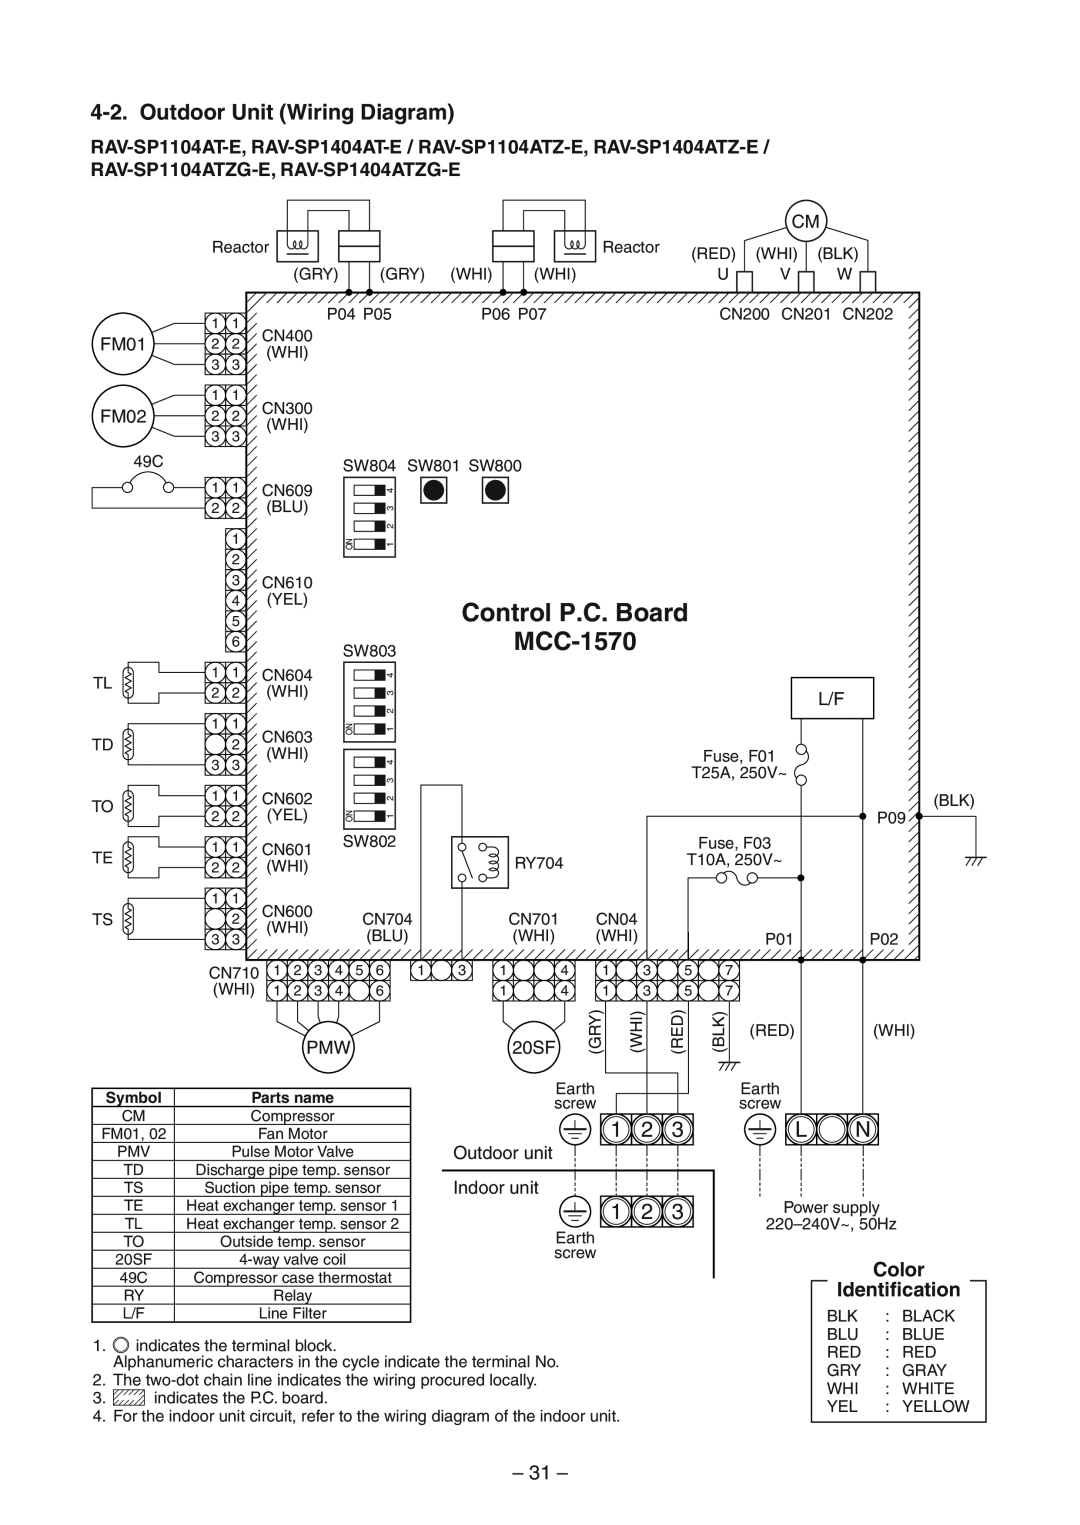 Toshiba RAV-SP1404AT-E, RAV-SM1404UT-E Control P.C. Board MCC-1570, Outdoor Unit Wiring Diagram, Color Identification, 31 